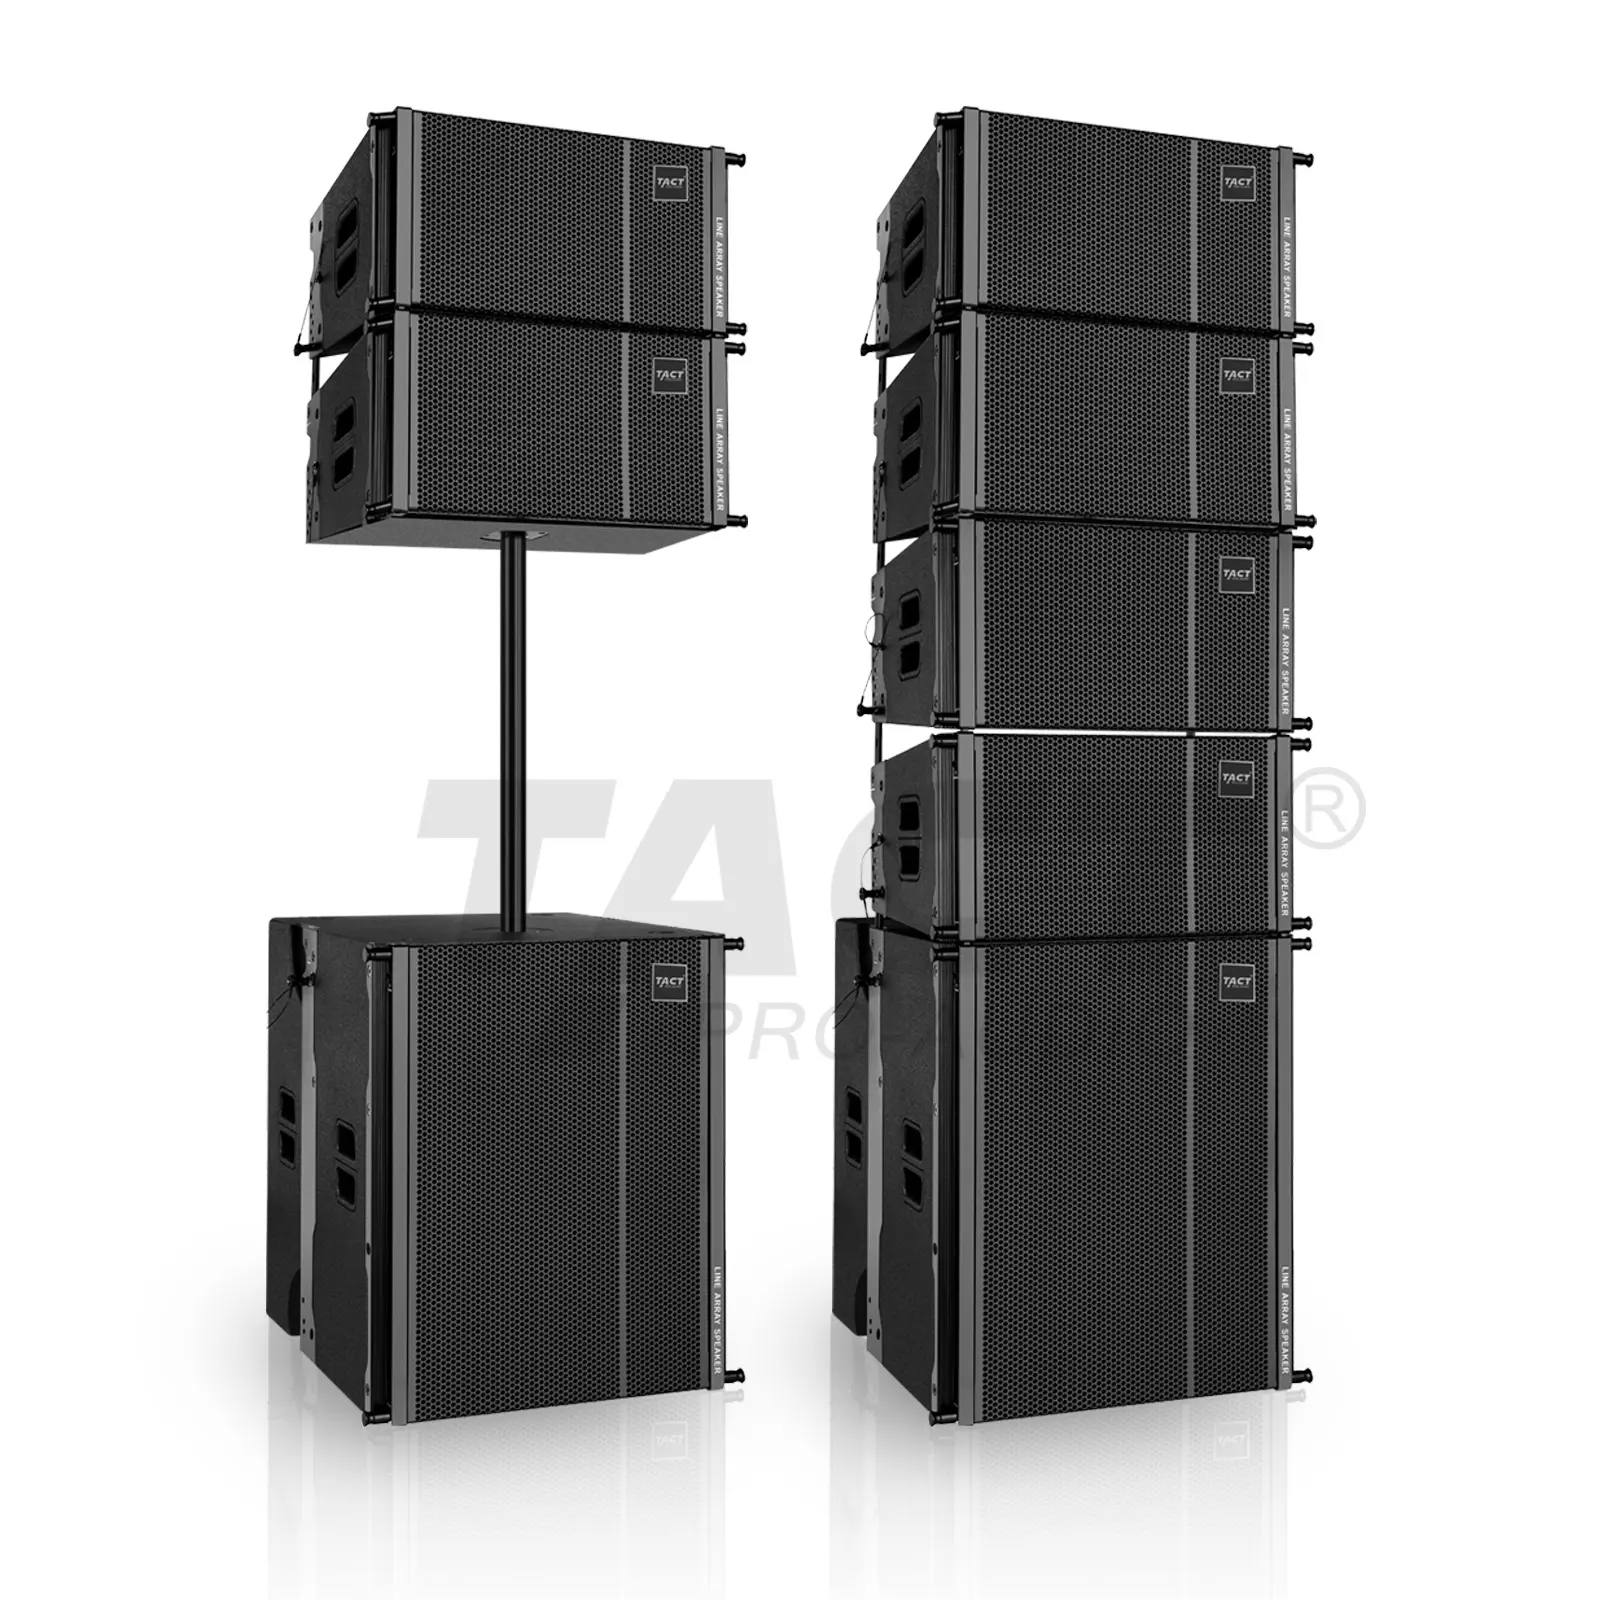 Hot sale new arrival line array speaker professional single 10inch high power mini line array speaker